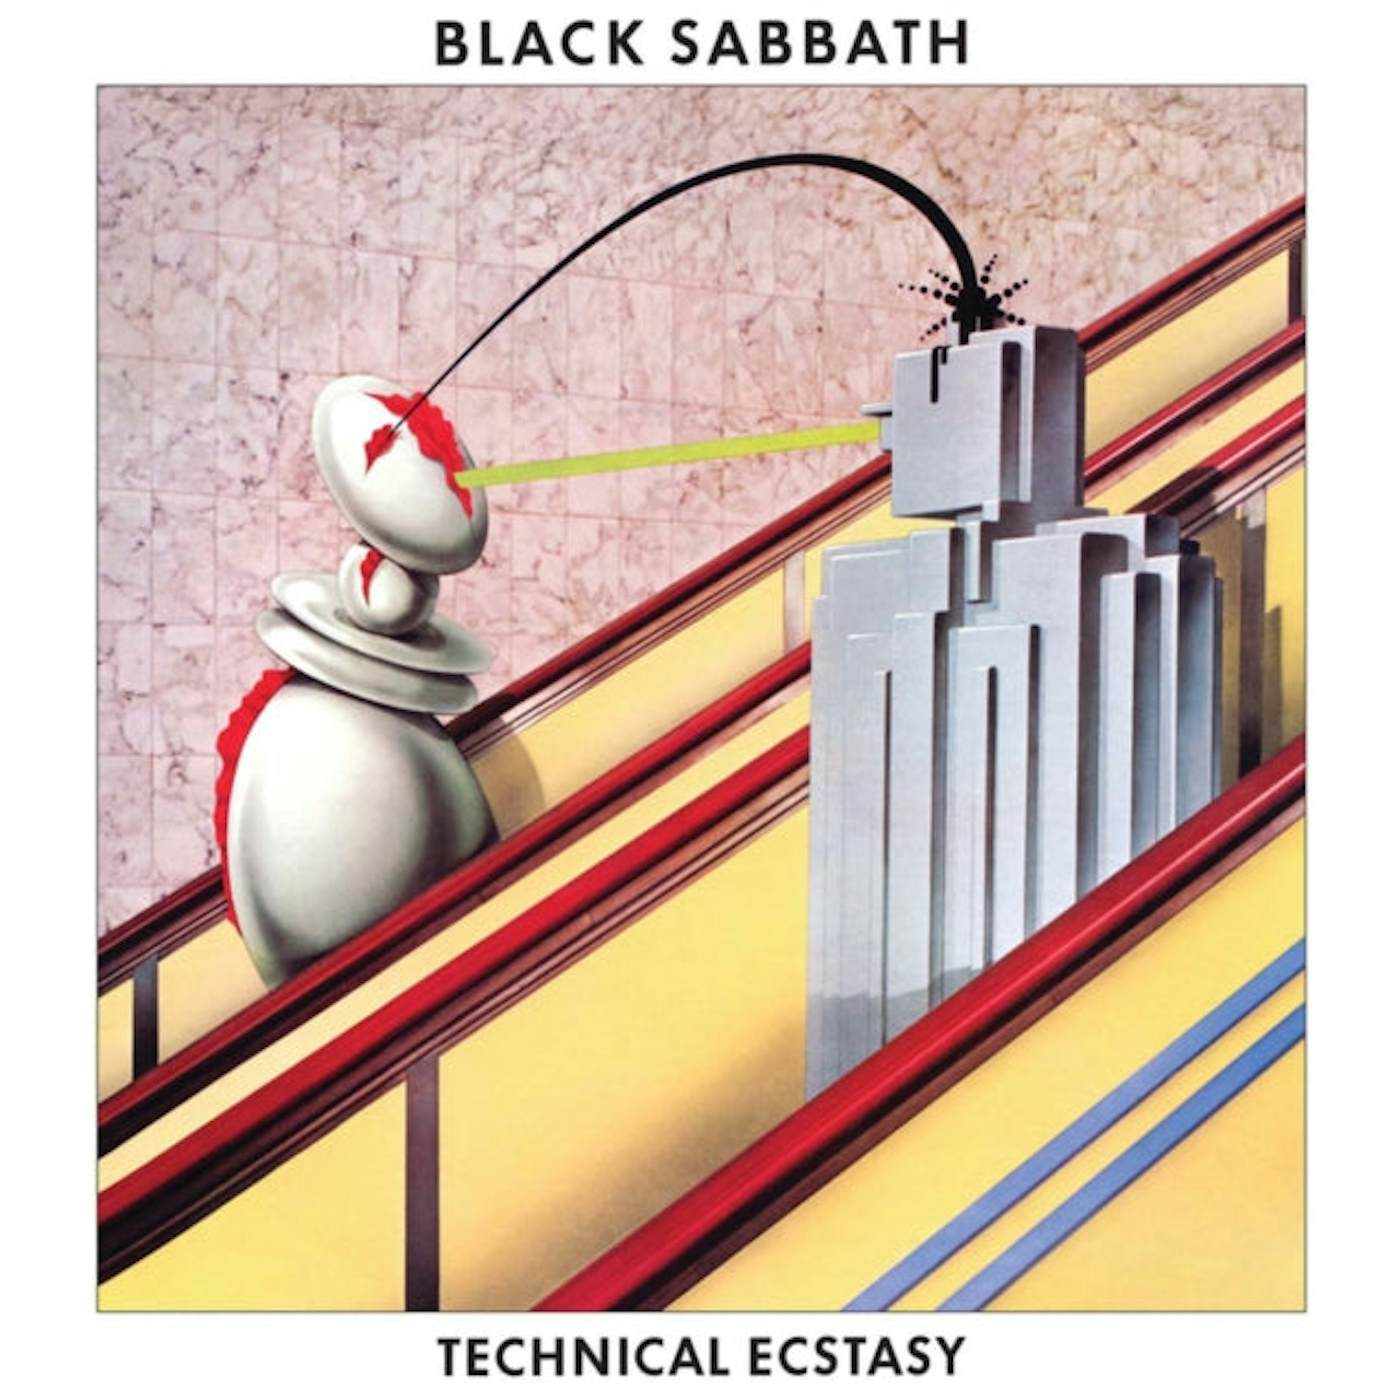 Black Sabbath LP Vinyl Record - Technical Ecstasy (Super Deluxe Edition)